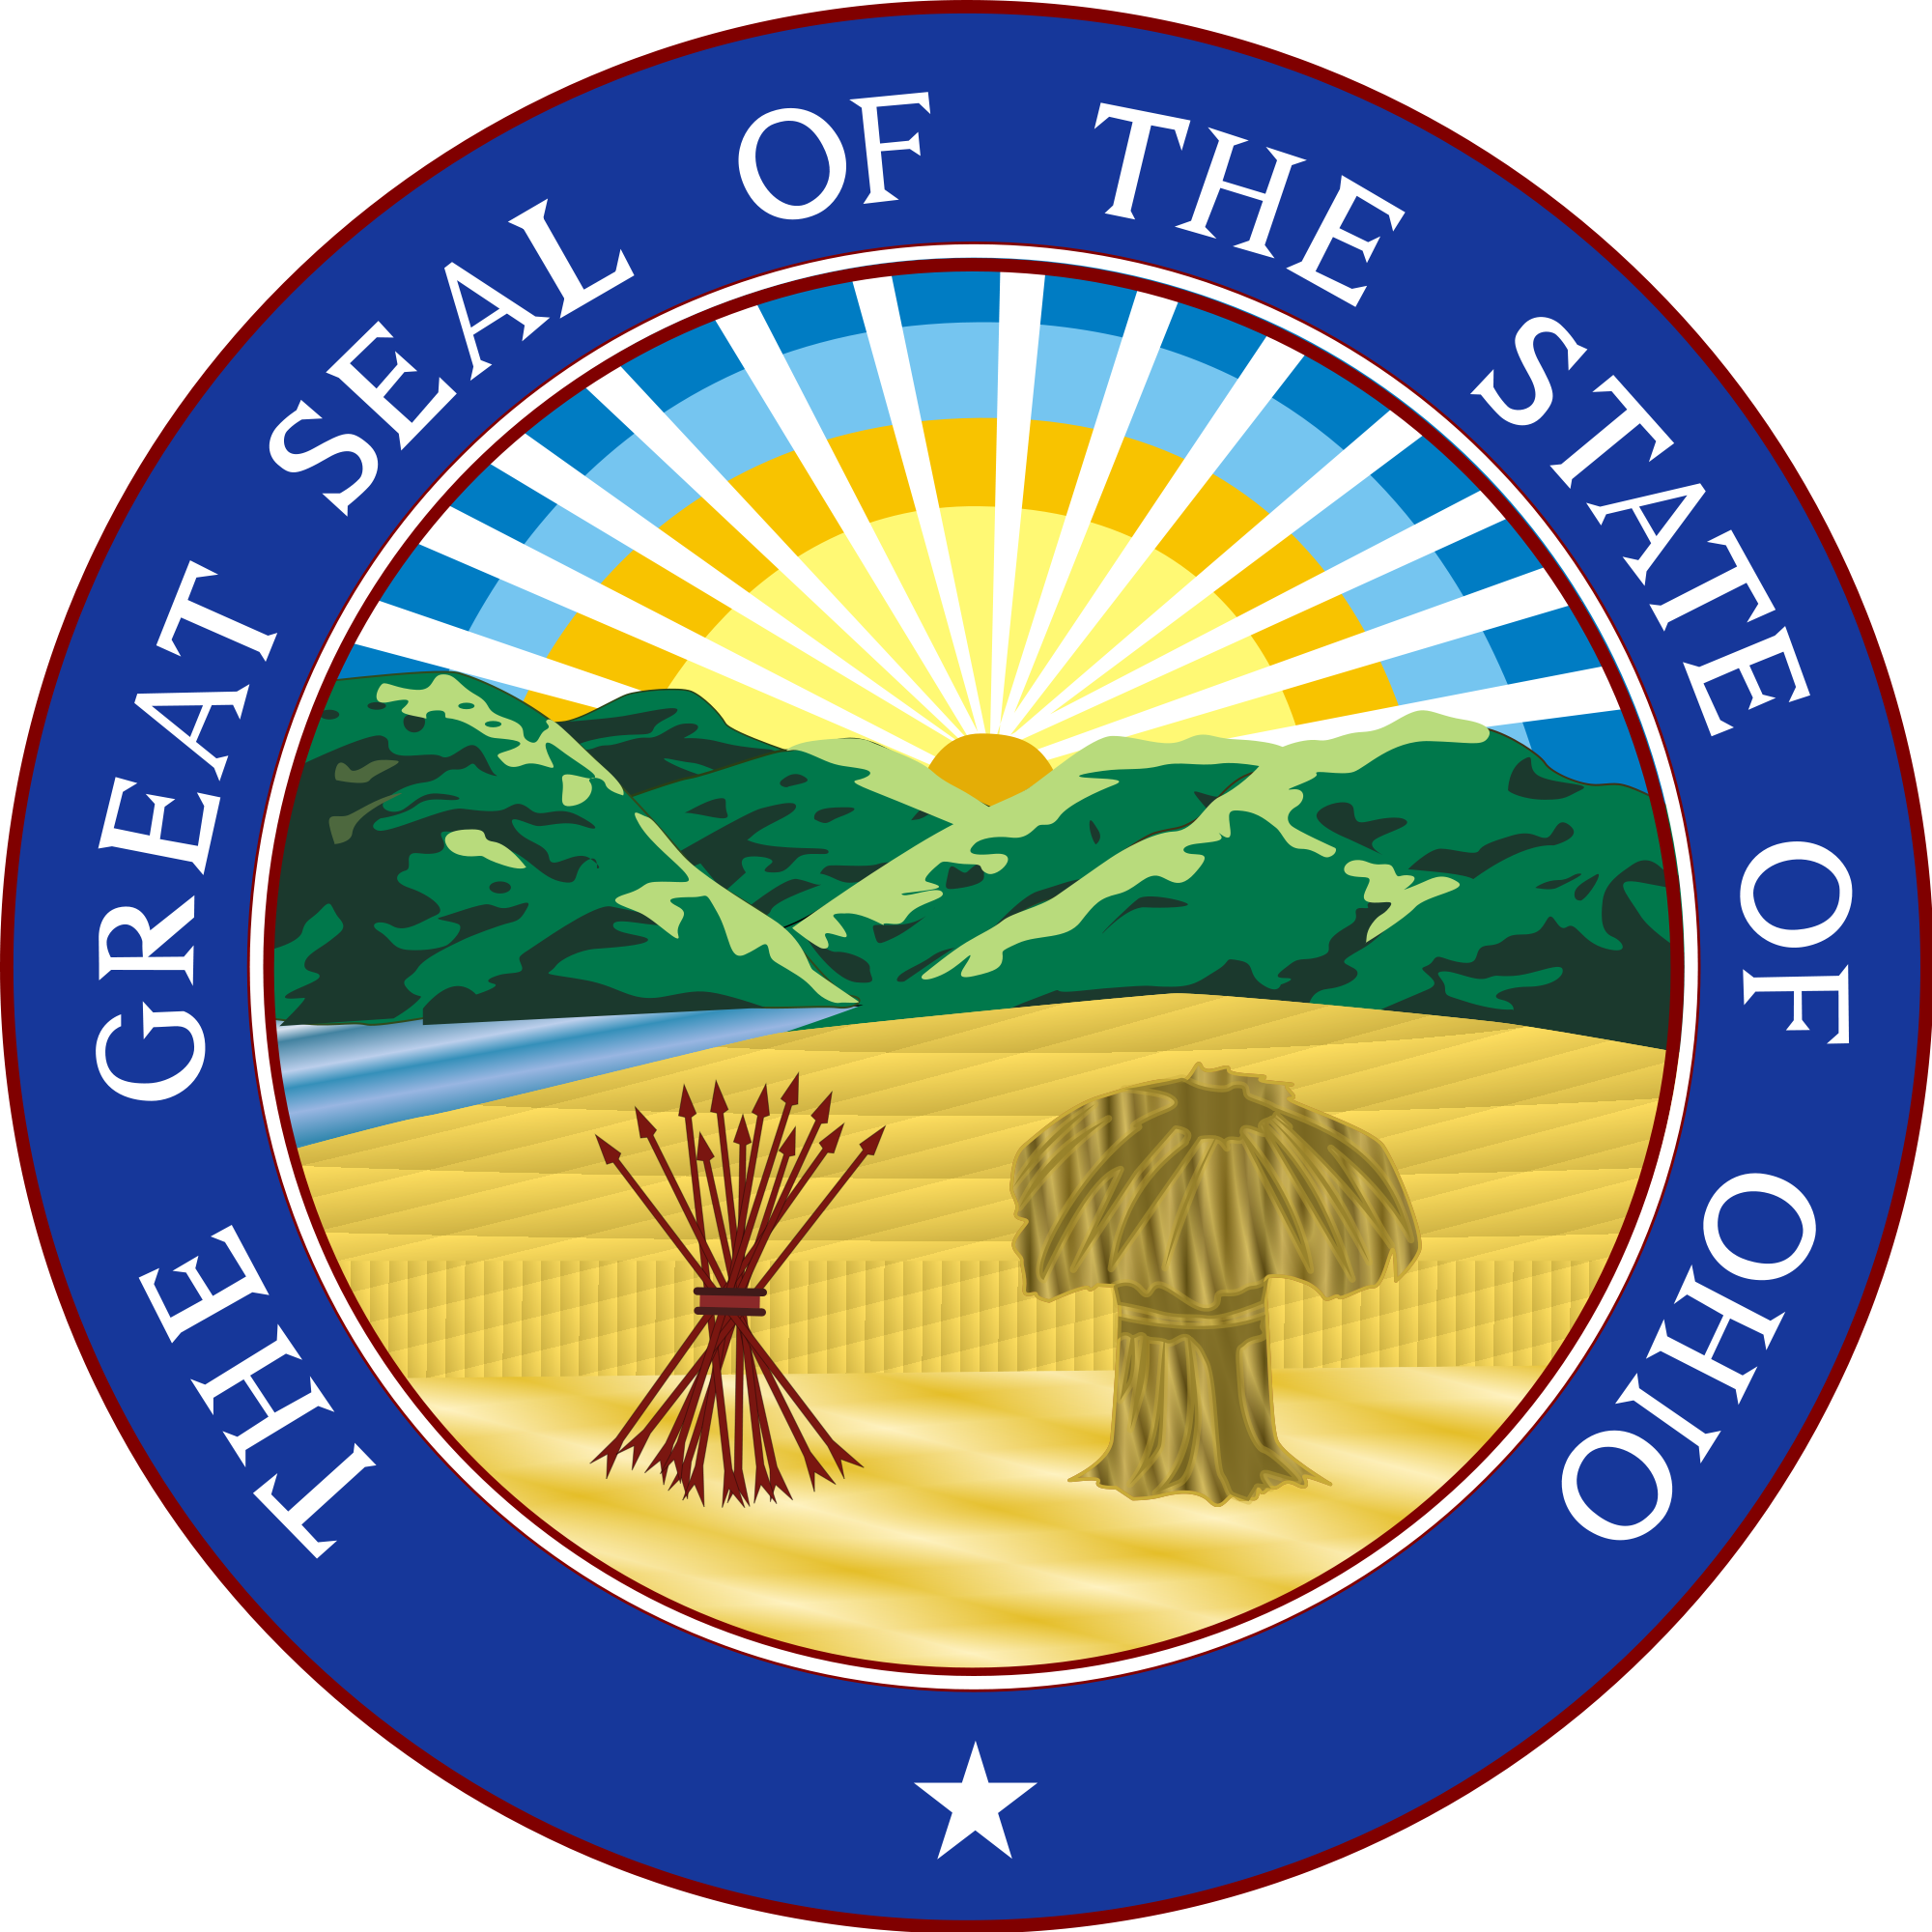 Seal Of Ohio - Great Seal Of Ohio (2000x2000)